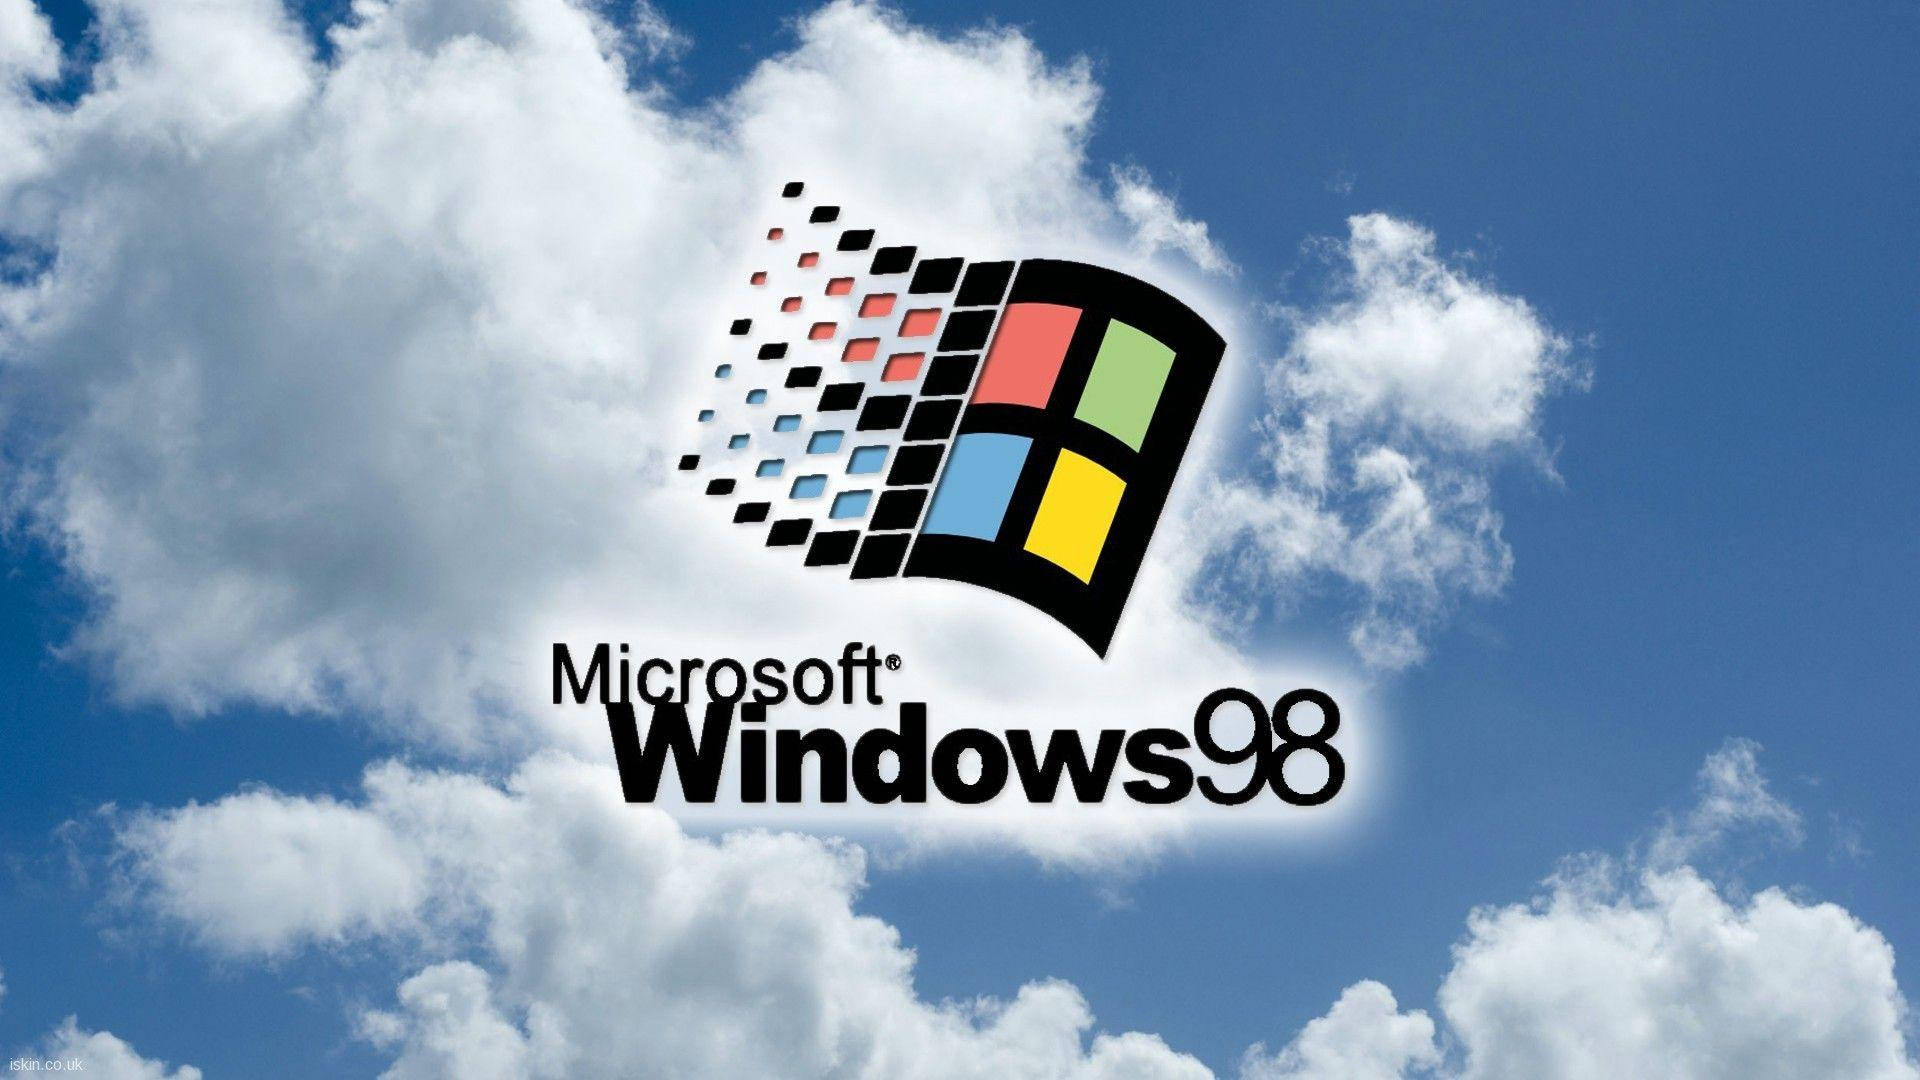 Windows 98 Wallpaper for FREE